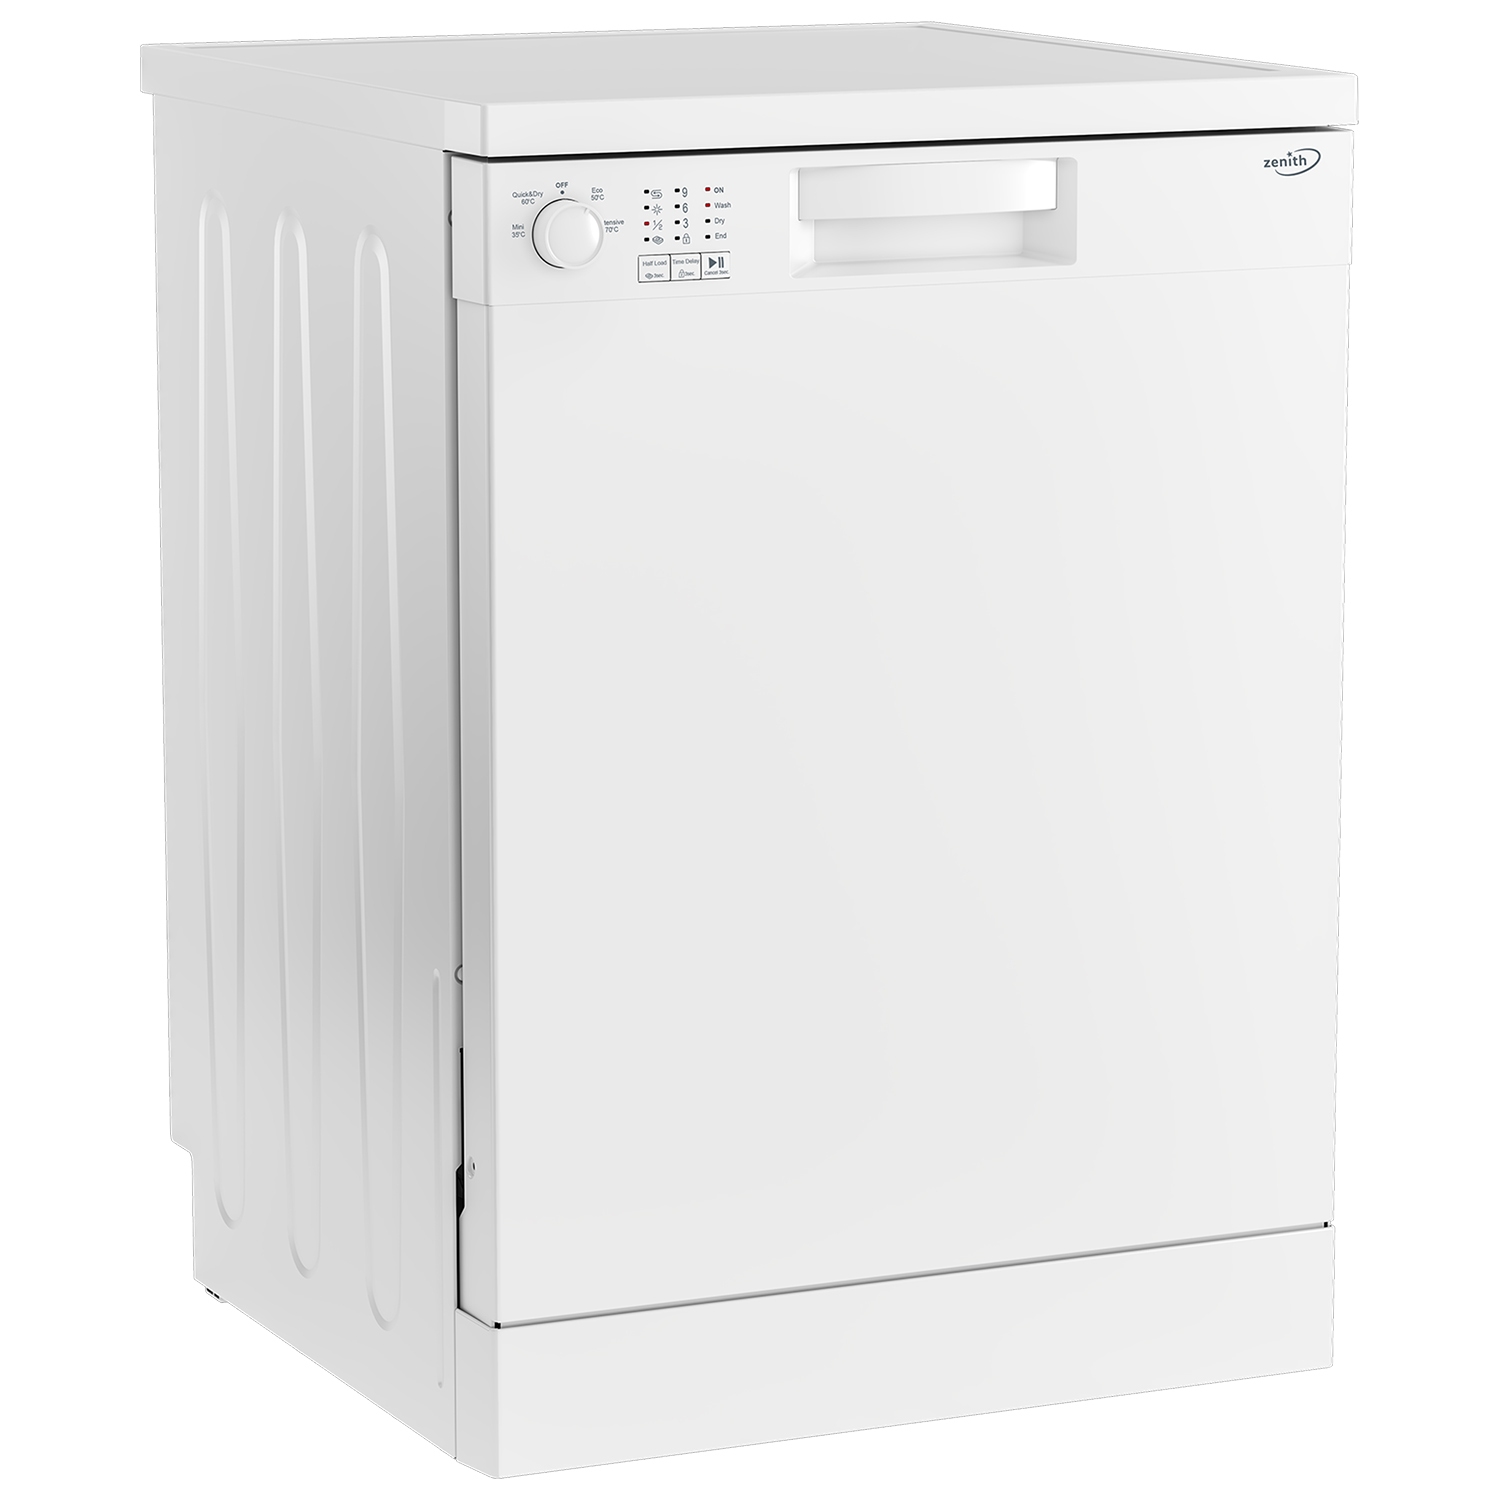 Zenith ZDW600W Full Size Dishwasher - White - 13 Place Settings - 0